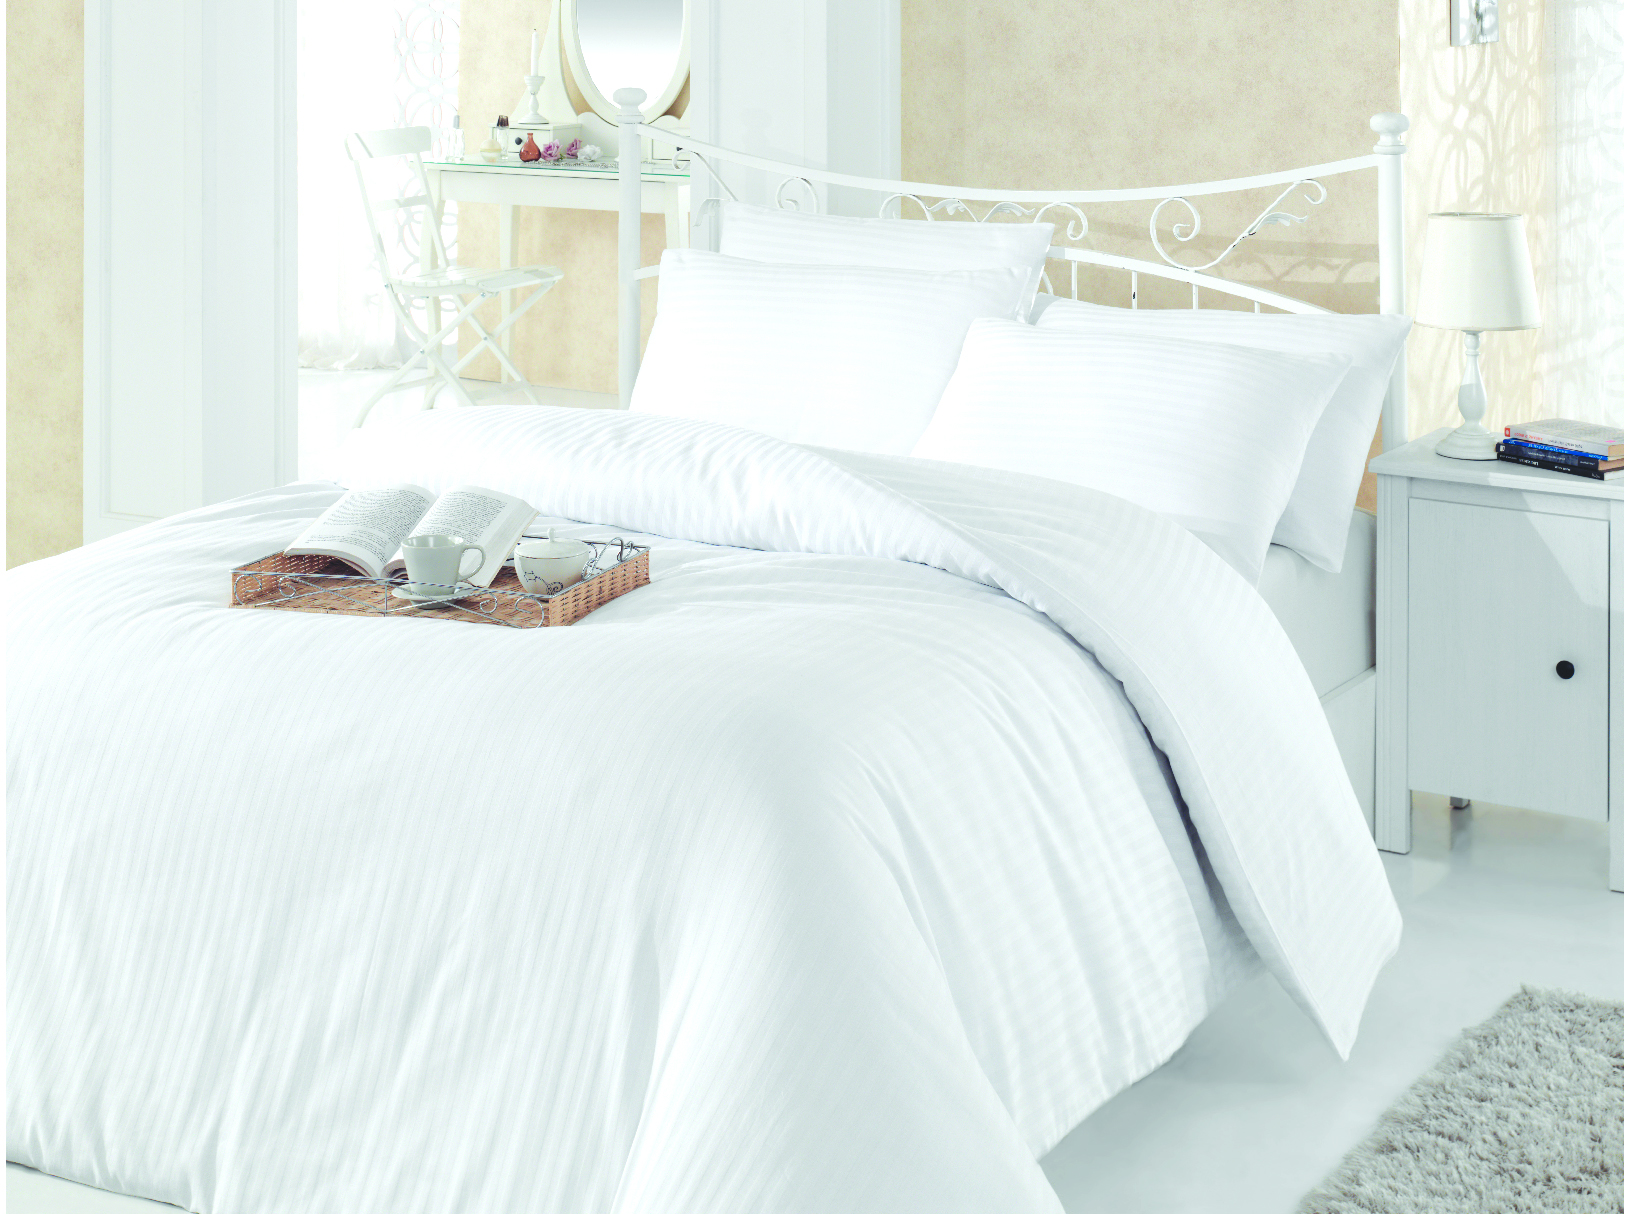 50x70cm Hotelska jastučnica 83Y bijela na pruge 1cm